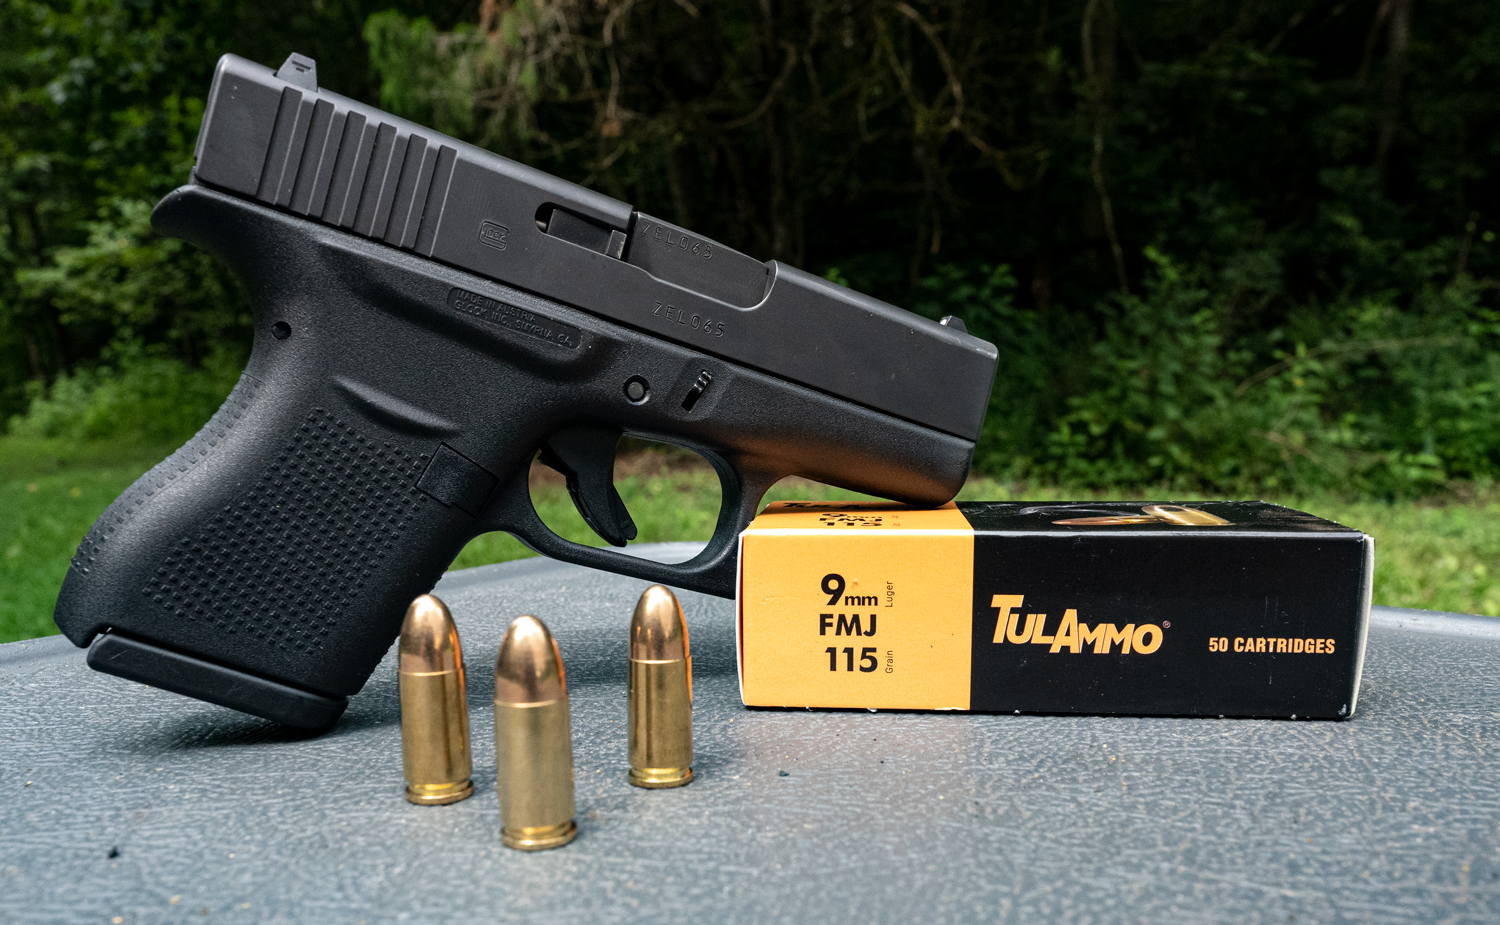 Glock 9mm with Tula ammo